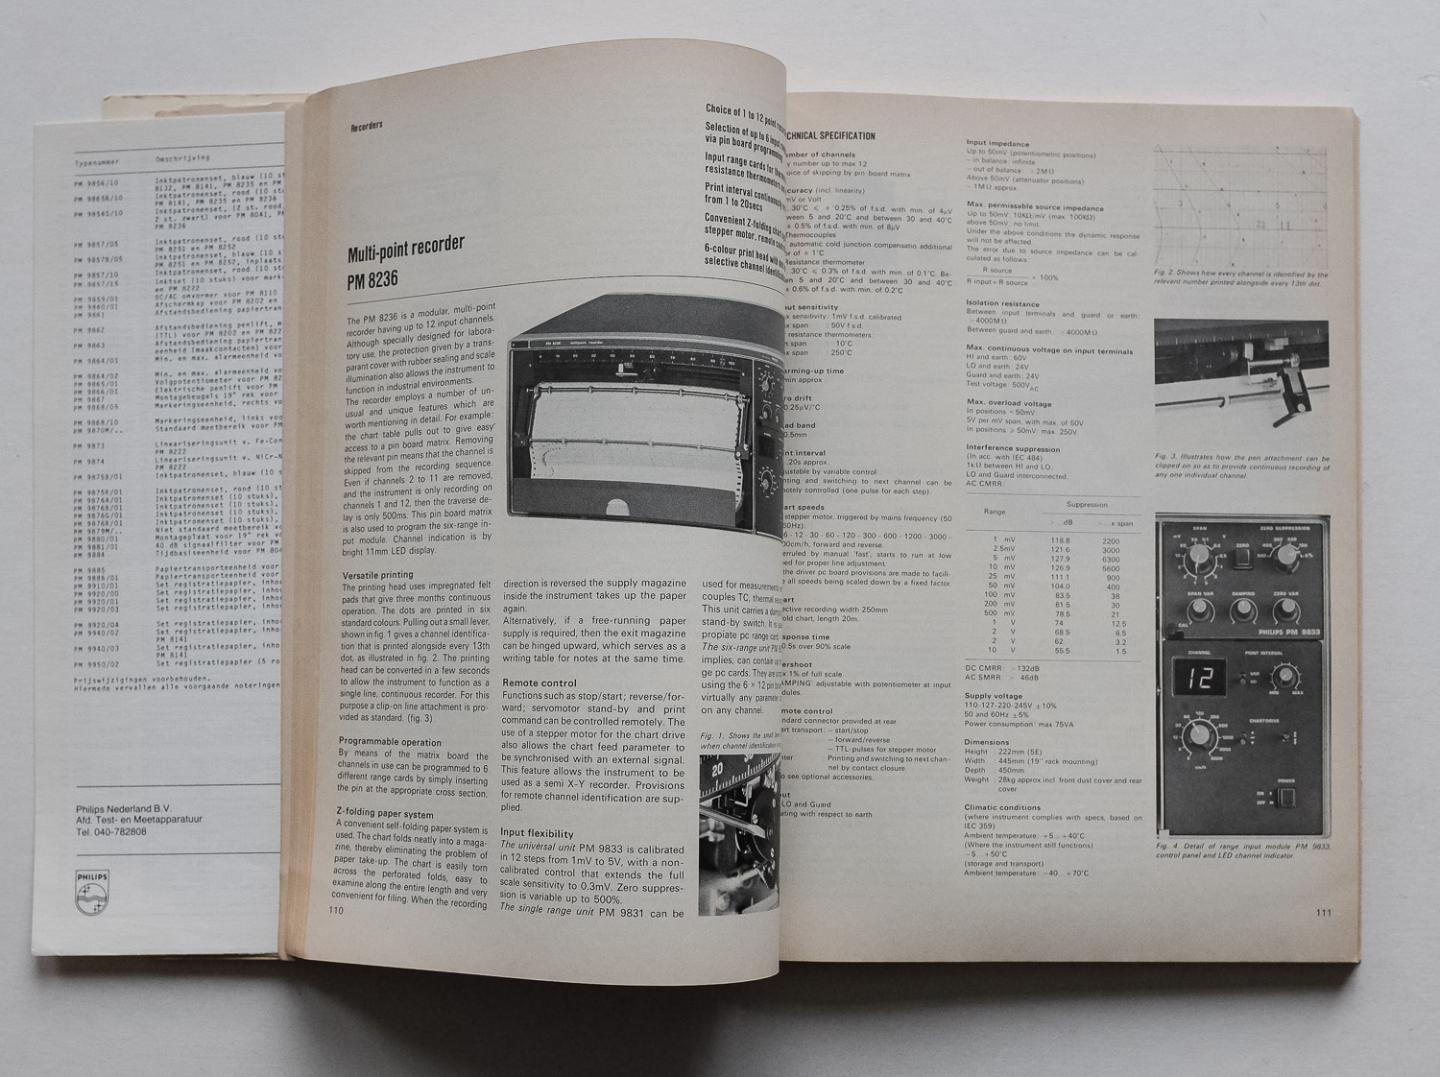 Philips Gloeilampenfabrieken Nederland n.v., Eindhoven - Test and measuring instruments - catalog 1981/82